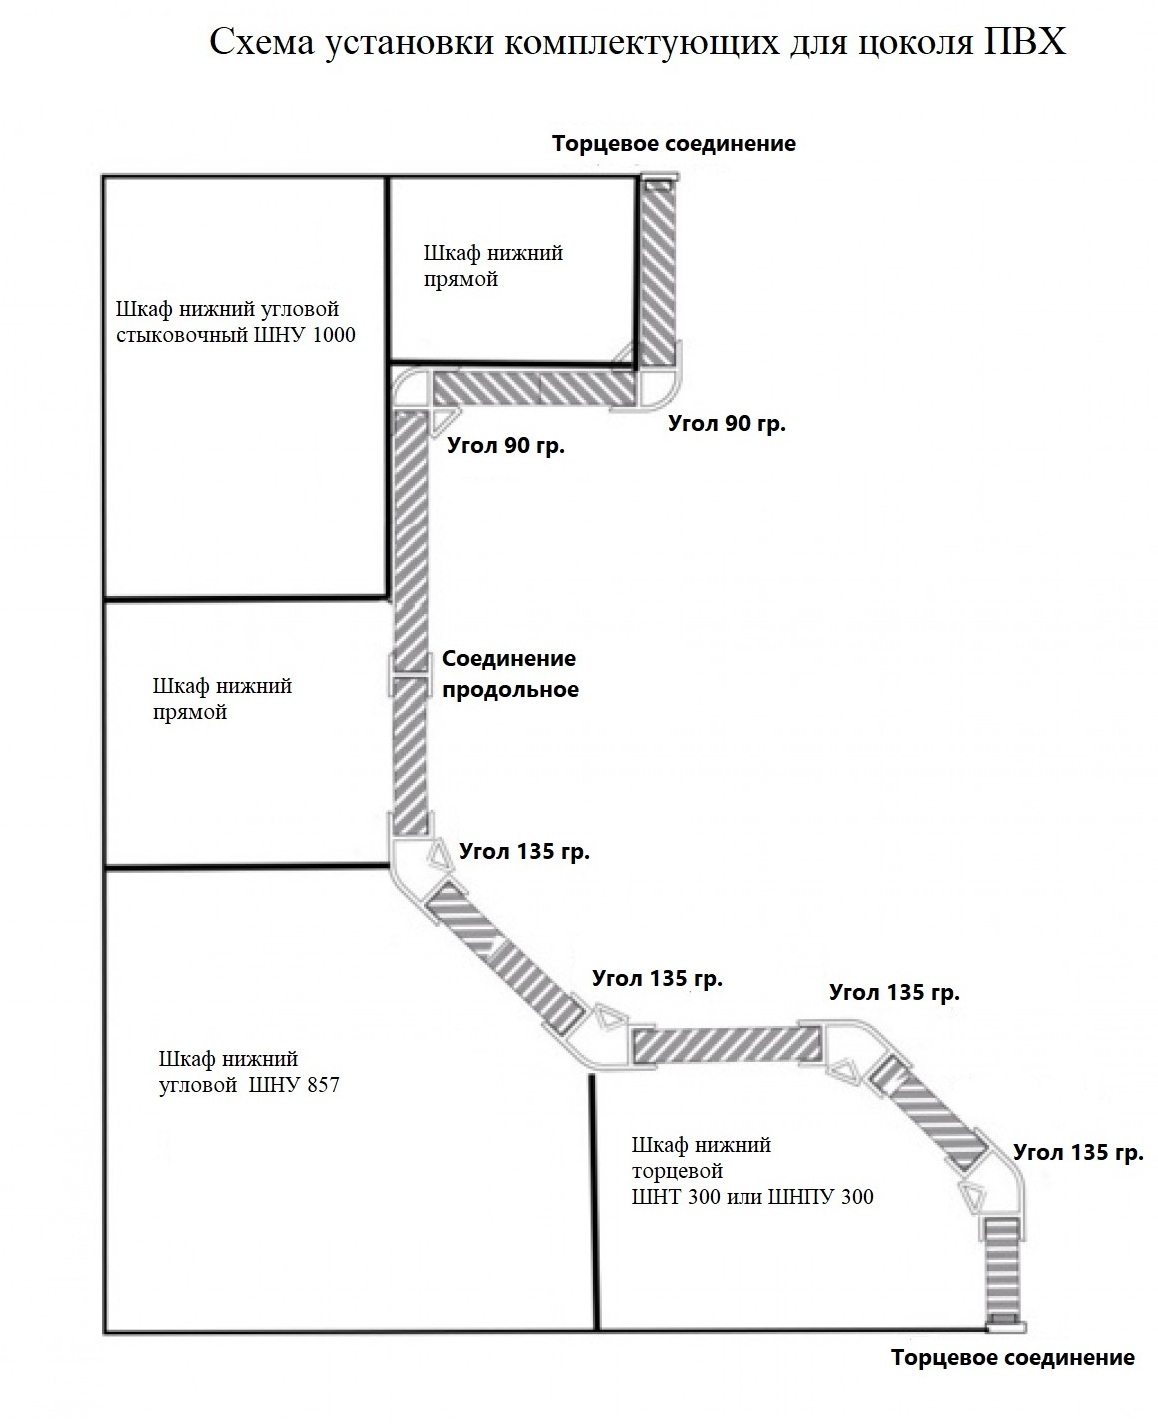 Схема установки комплектующих для пластикового цоколя ПВХ для кухонных модулей